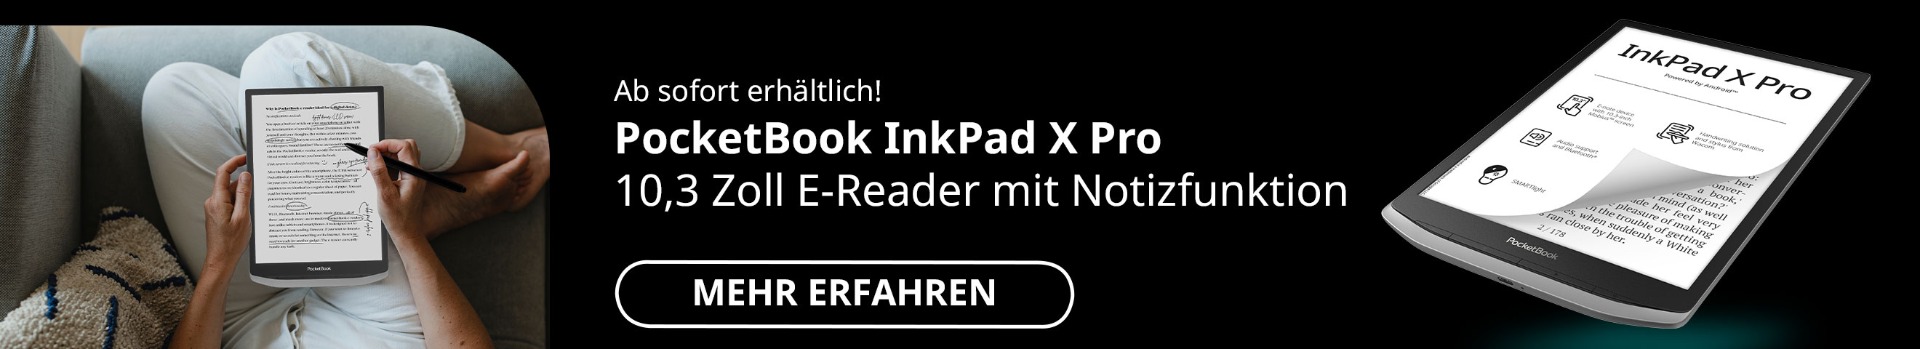 Pocketbook InkPad X Pro Kombi-Angebot